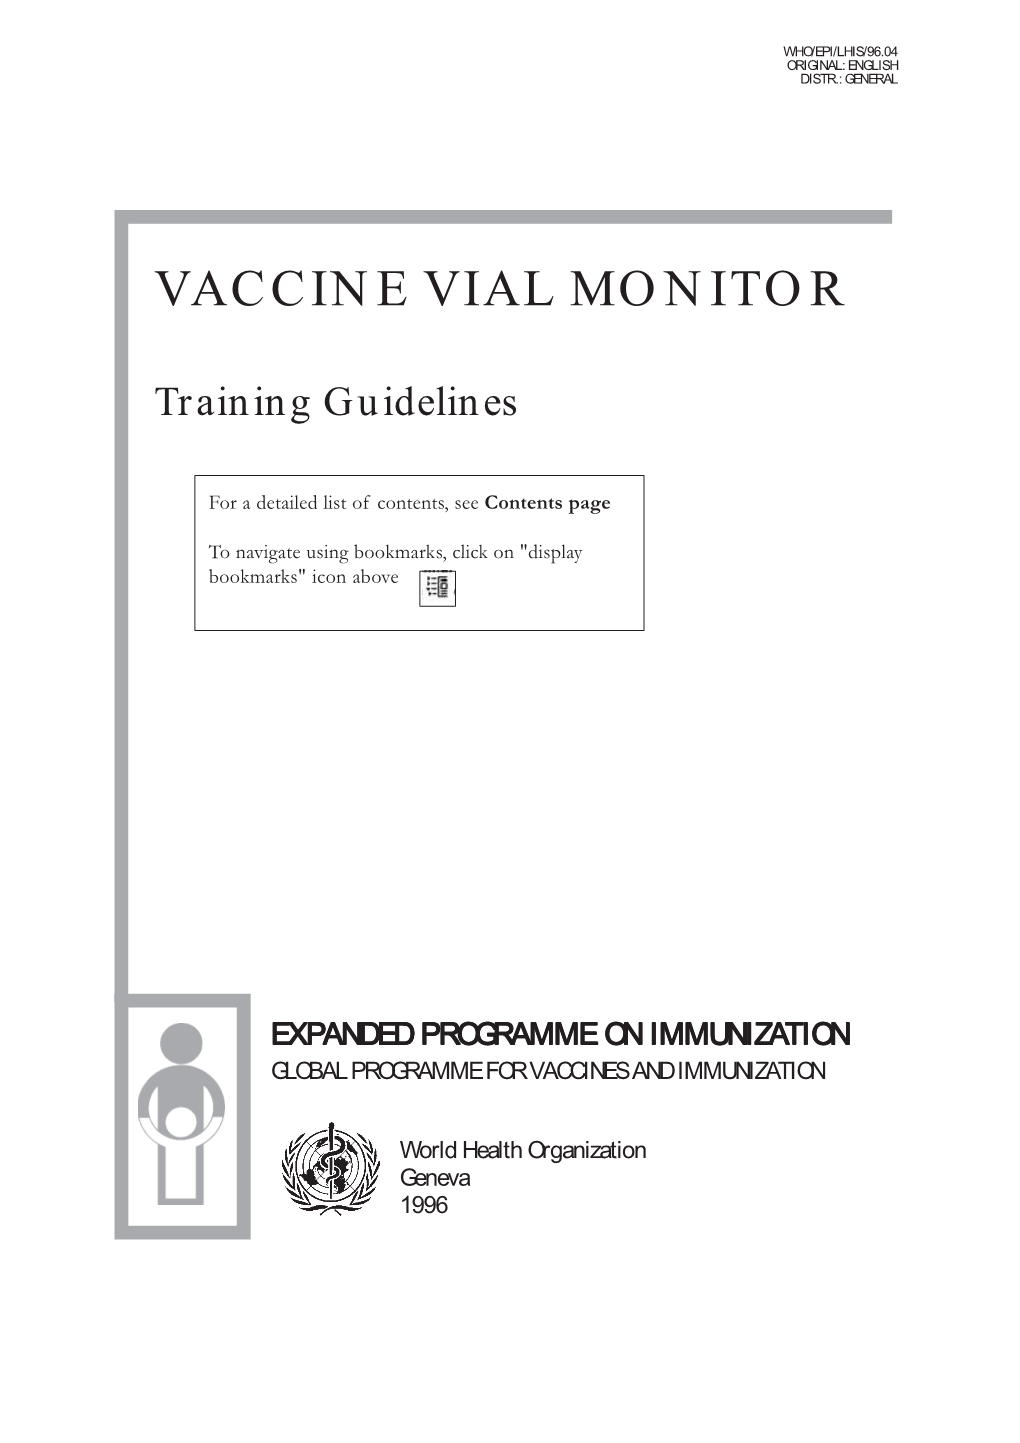 Vaccine Vial Monitor